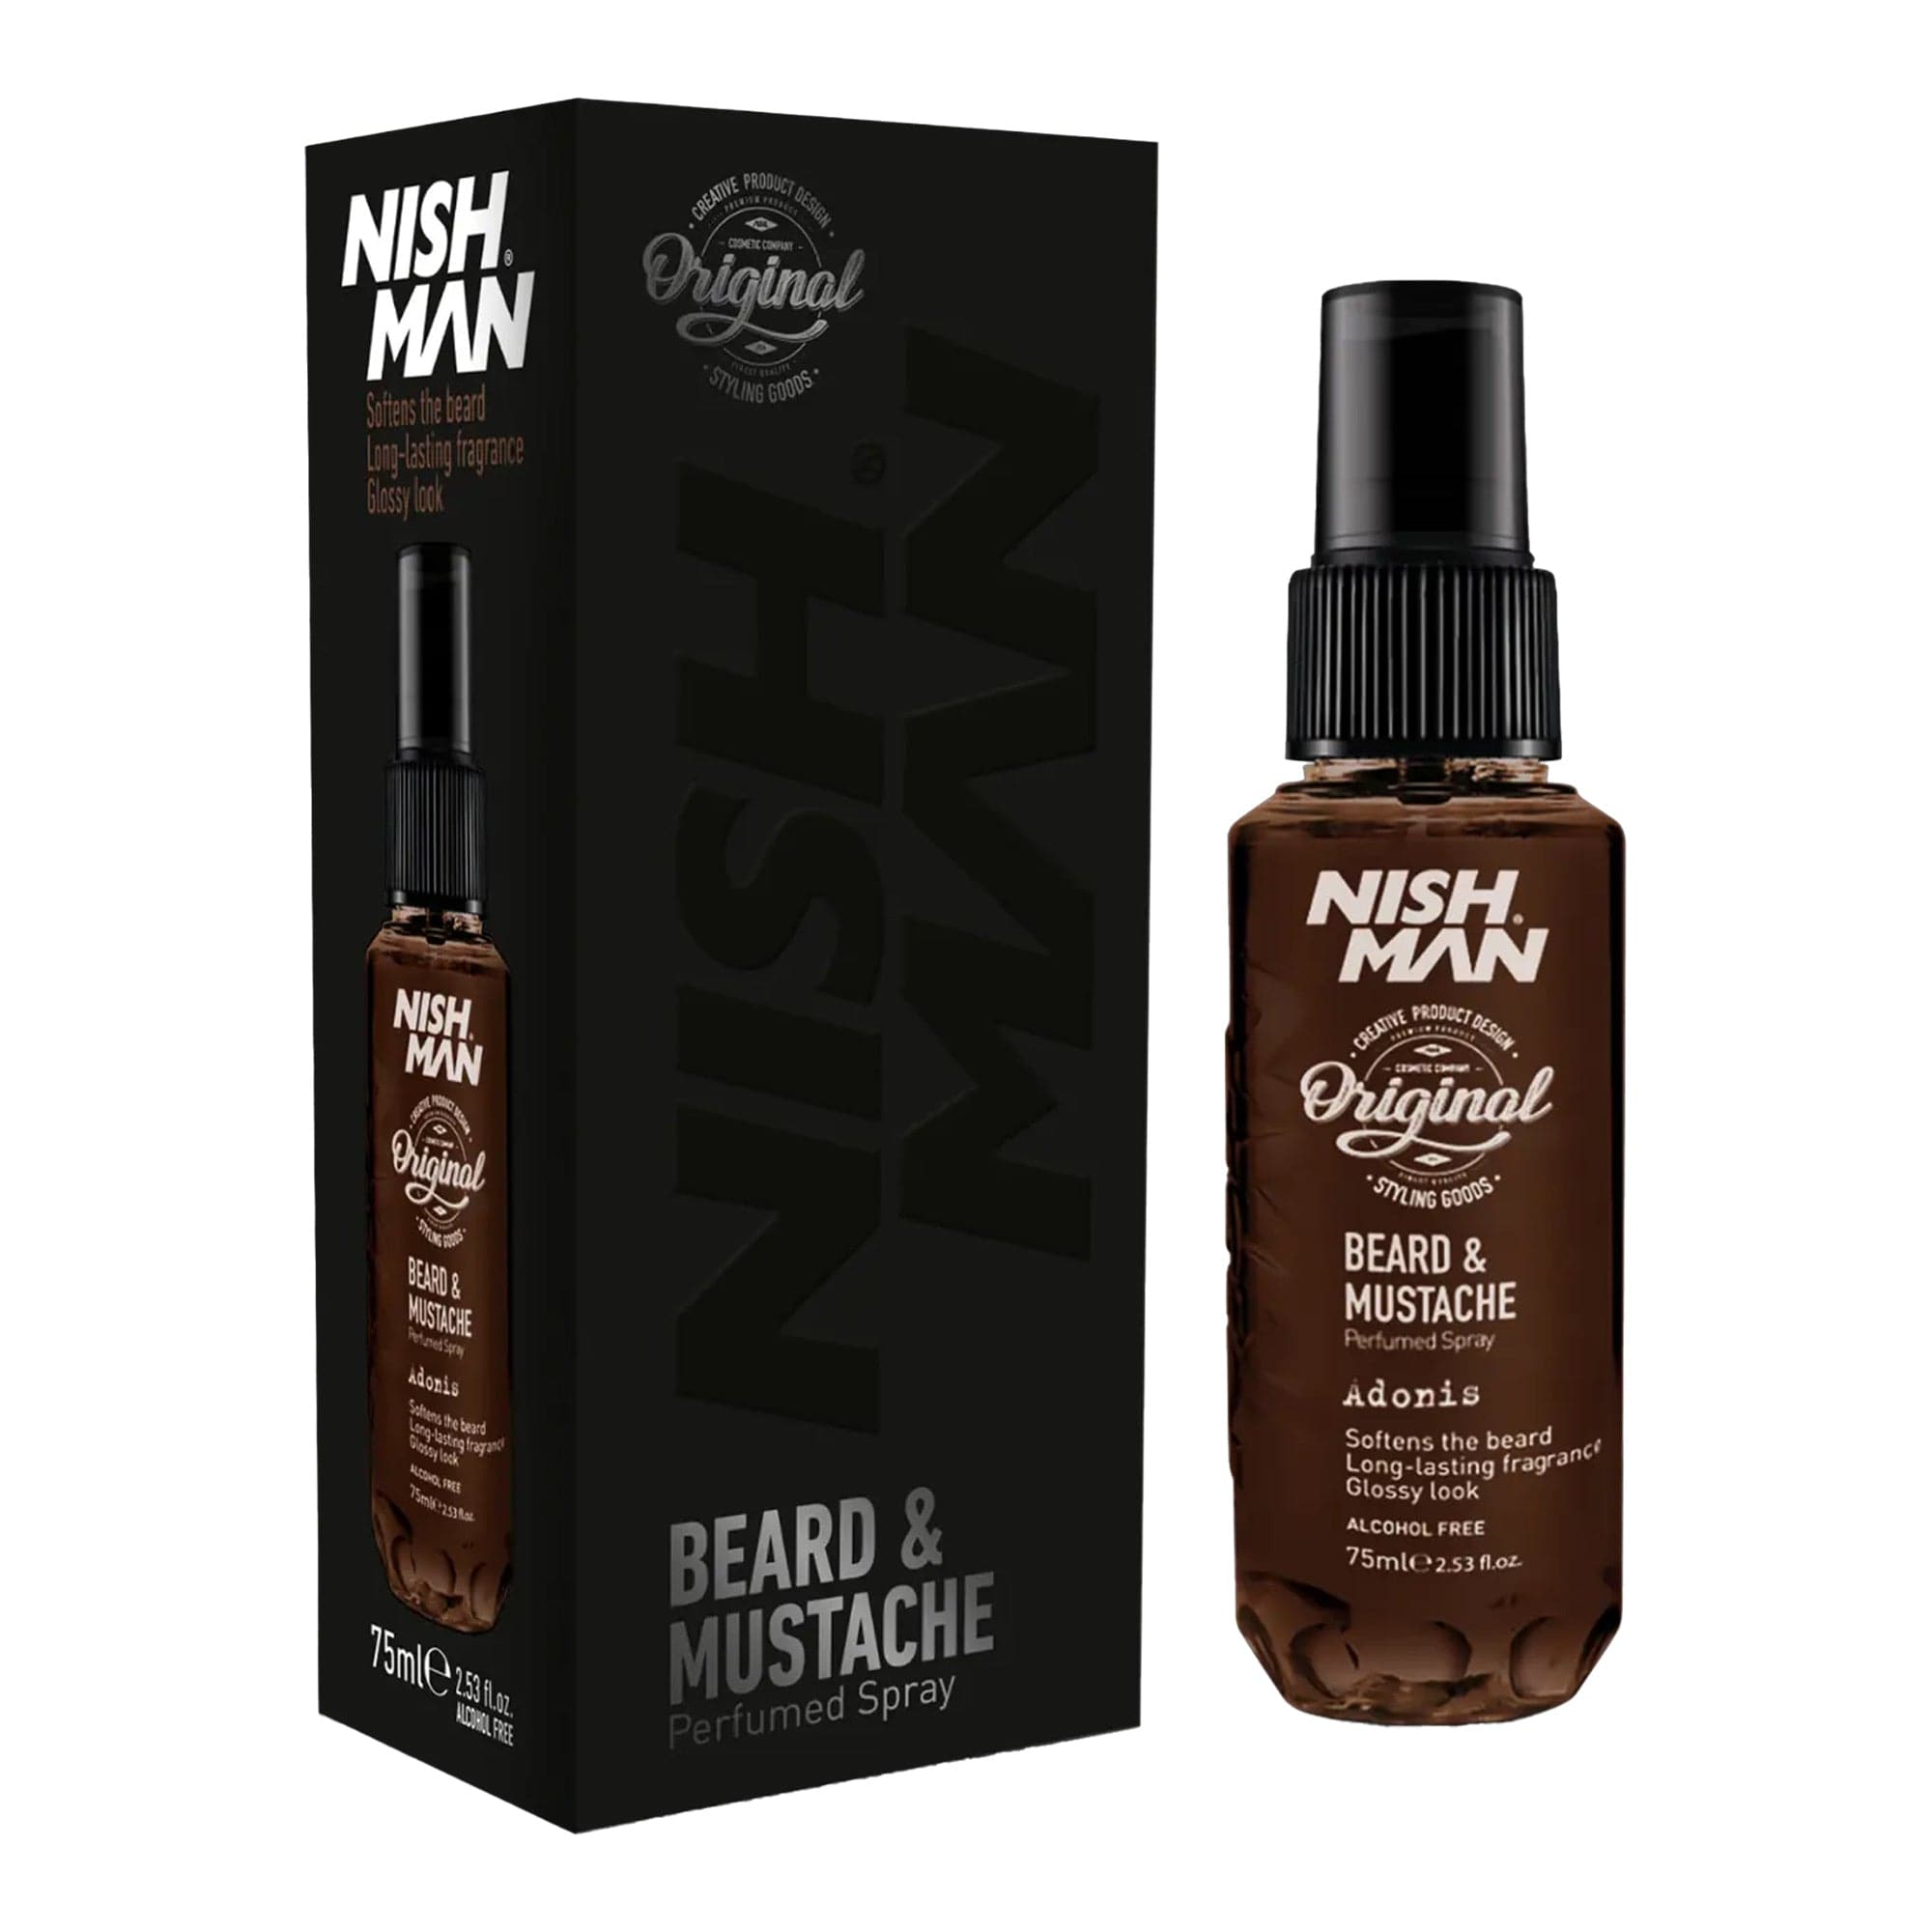 Nishman - Beard & Mustache Perfumed Spray Adonis 75ml